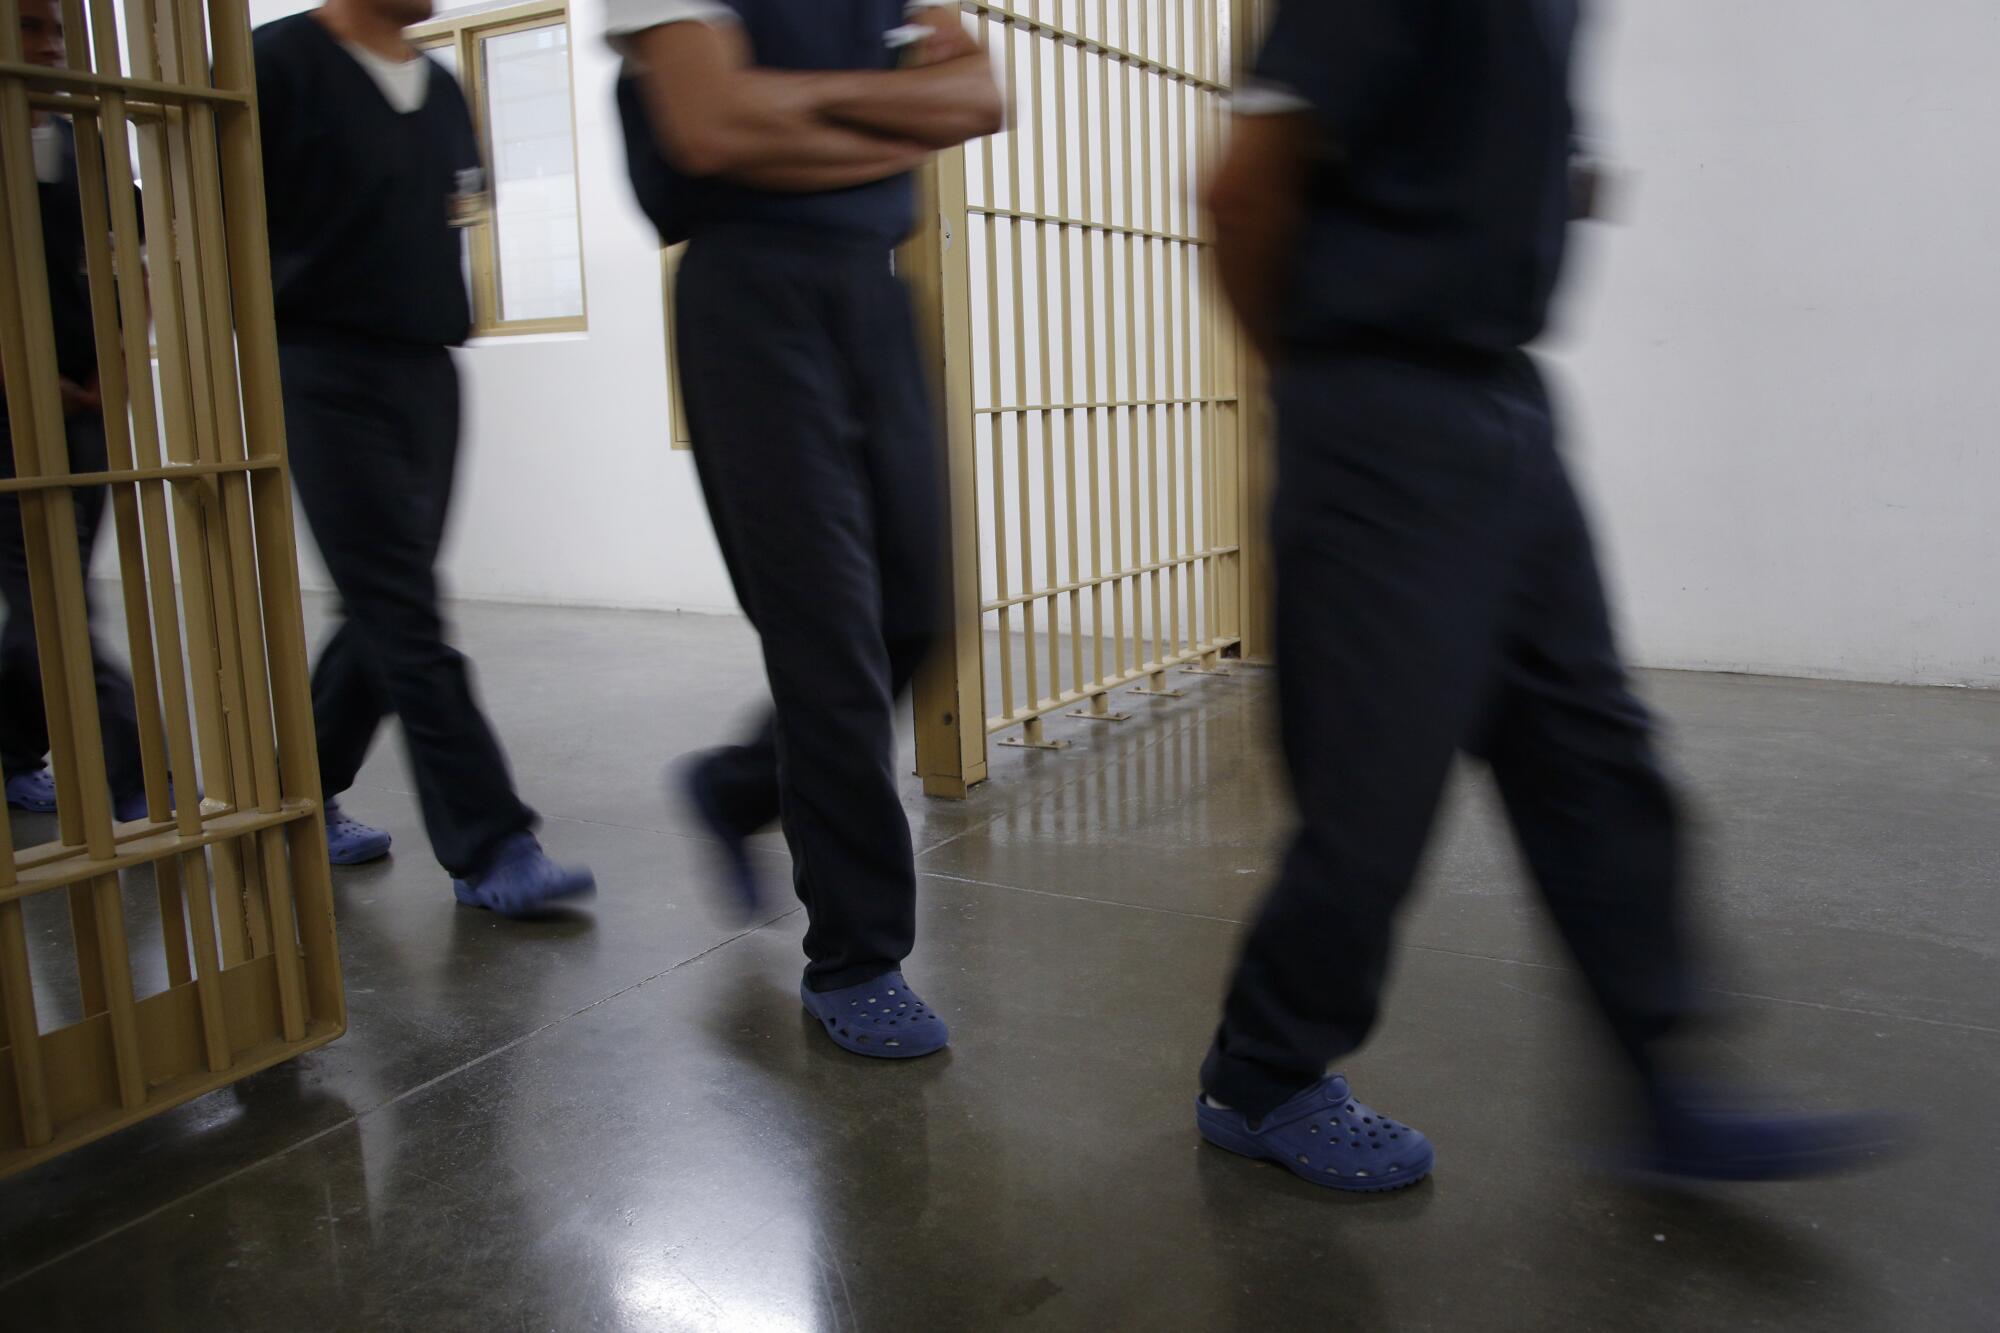 Detainees walk through a metal gate at Otay Mesa Detention Center